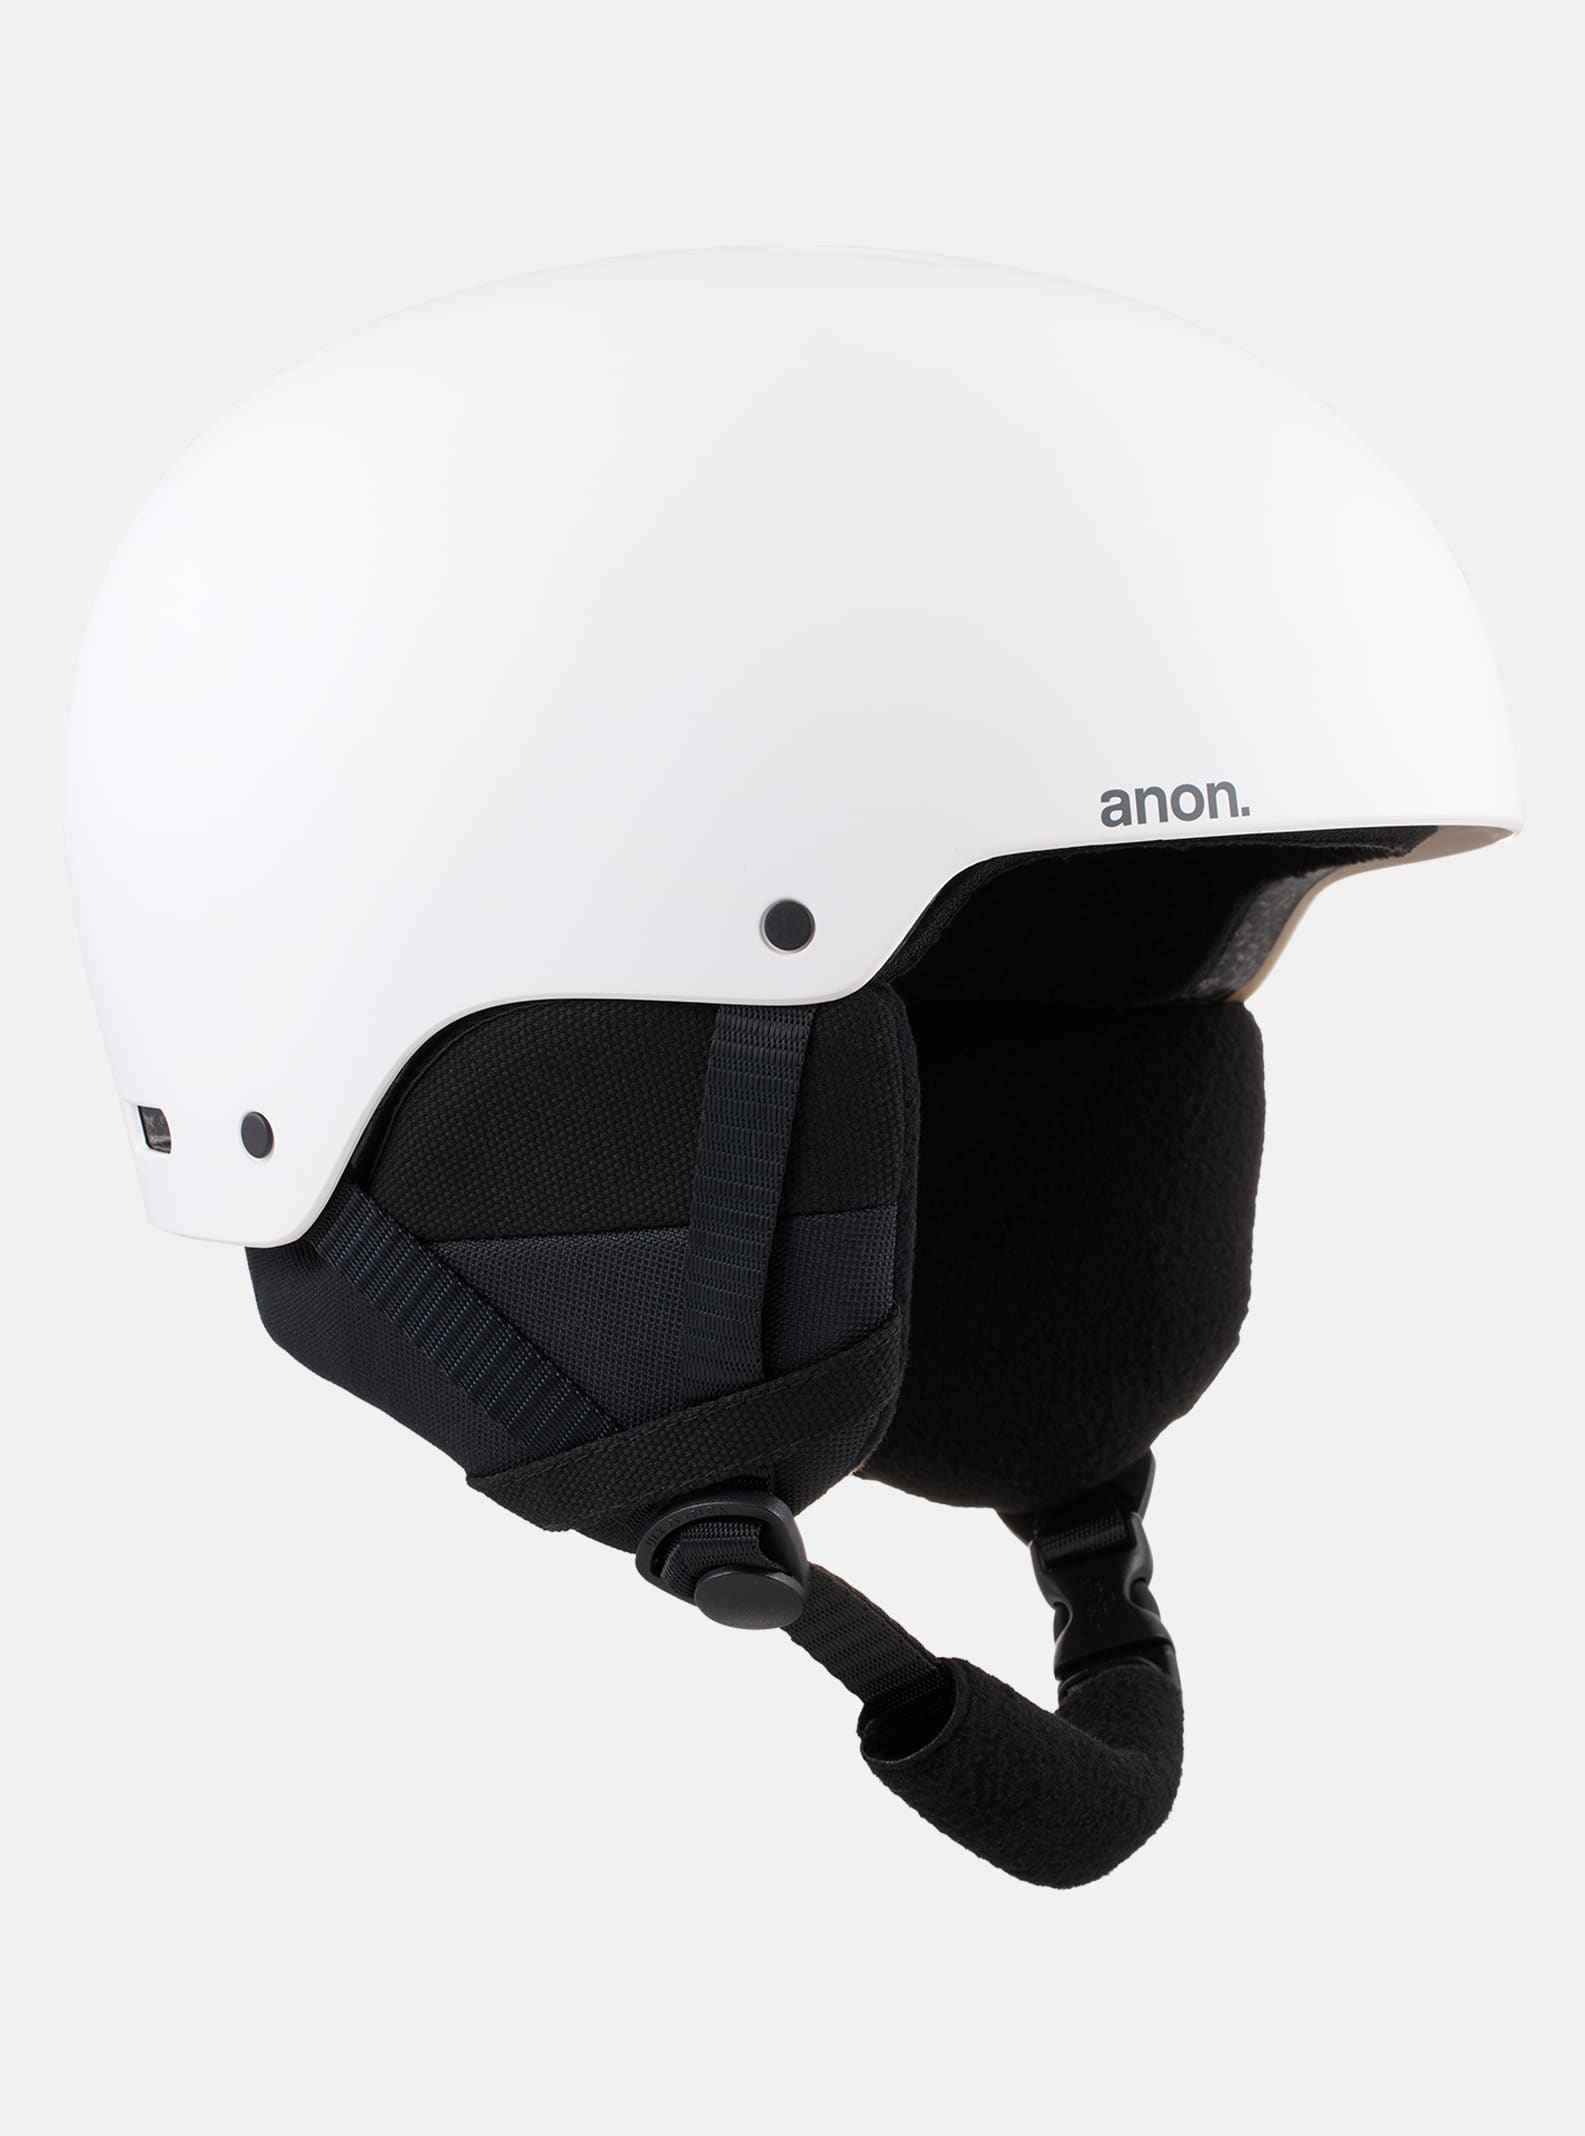 Raider 3 Ski & Snowboard Helmet